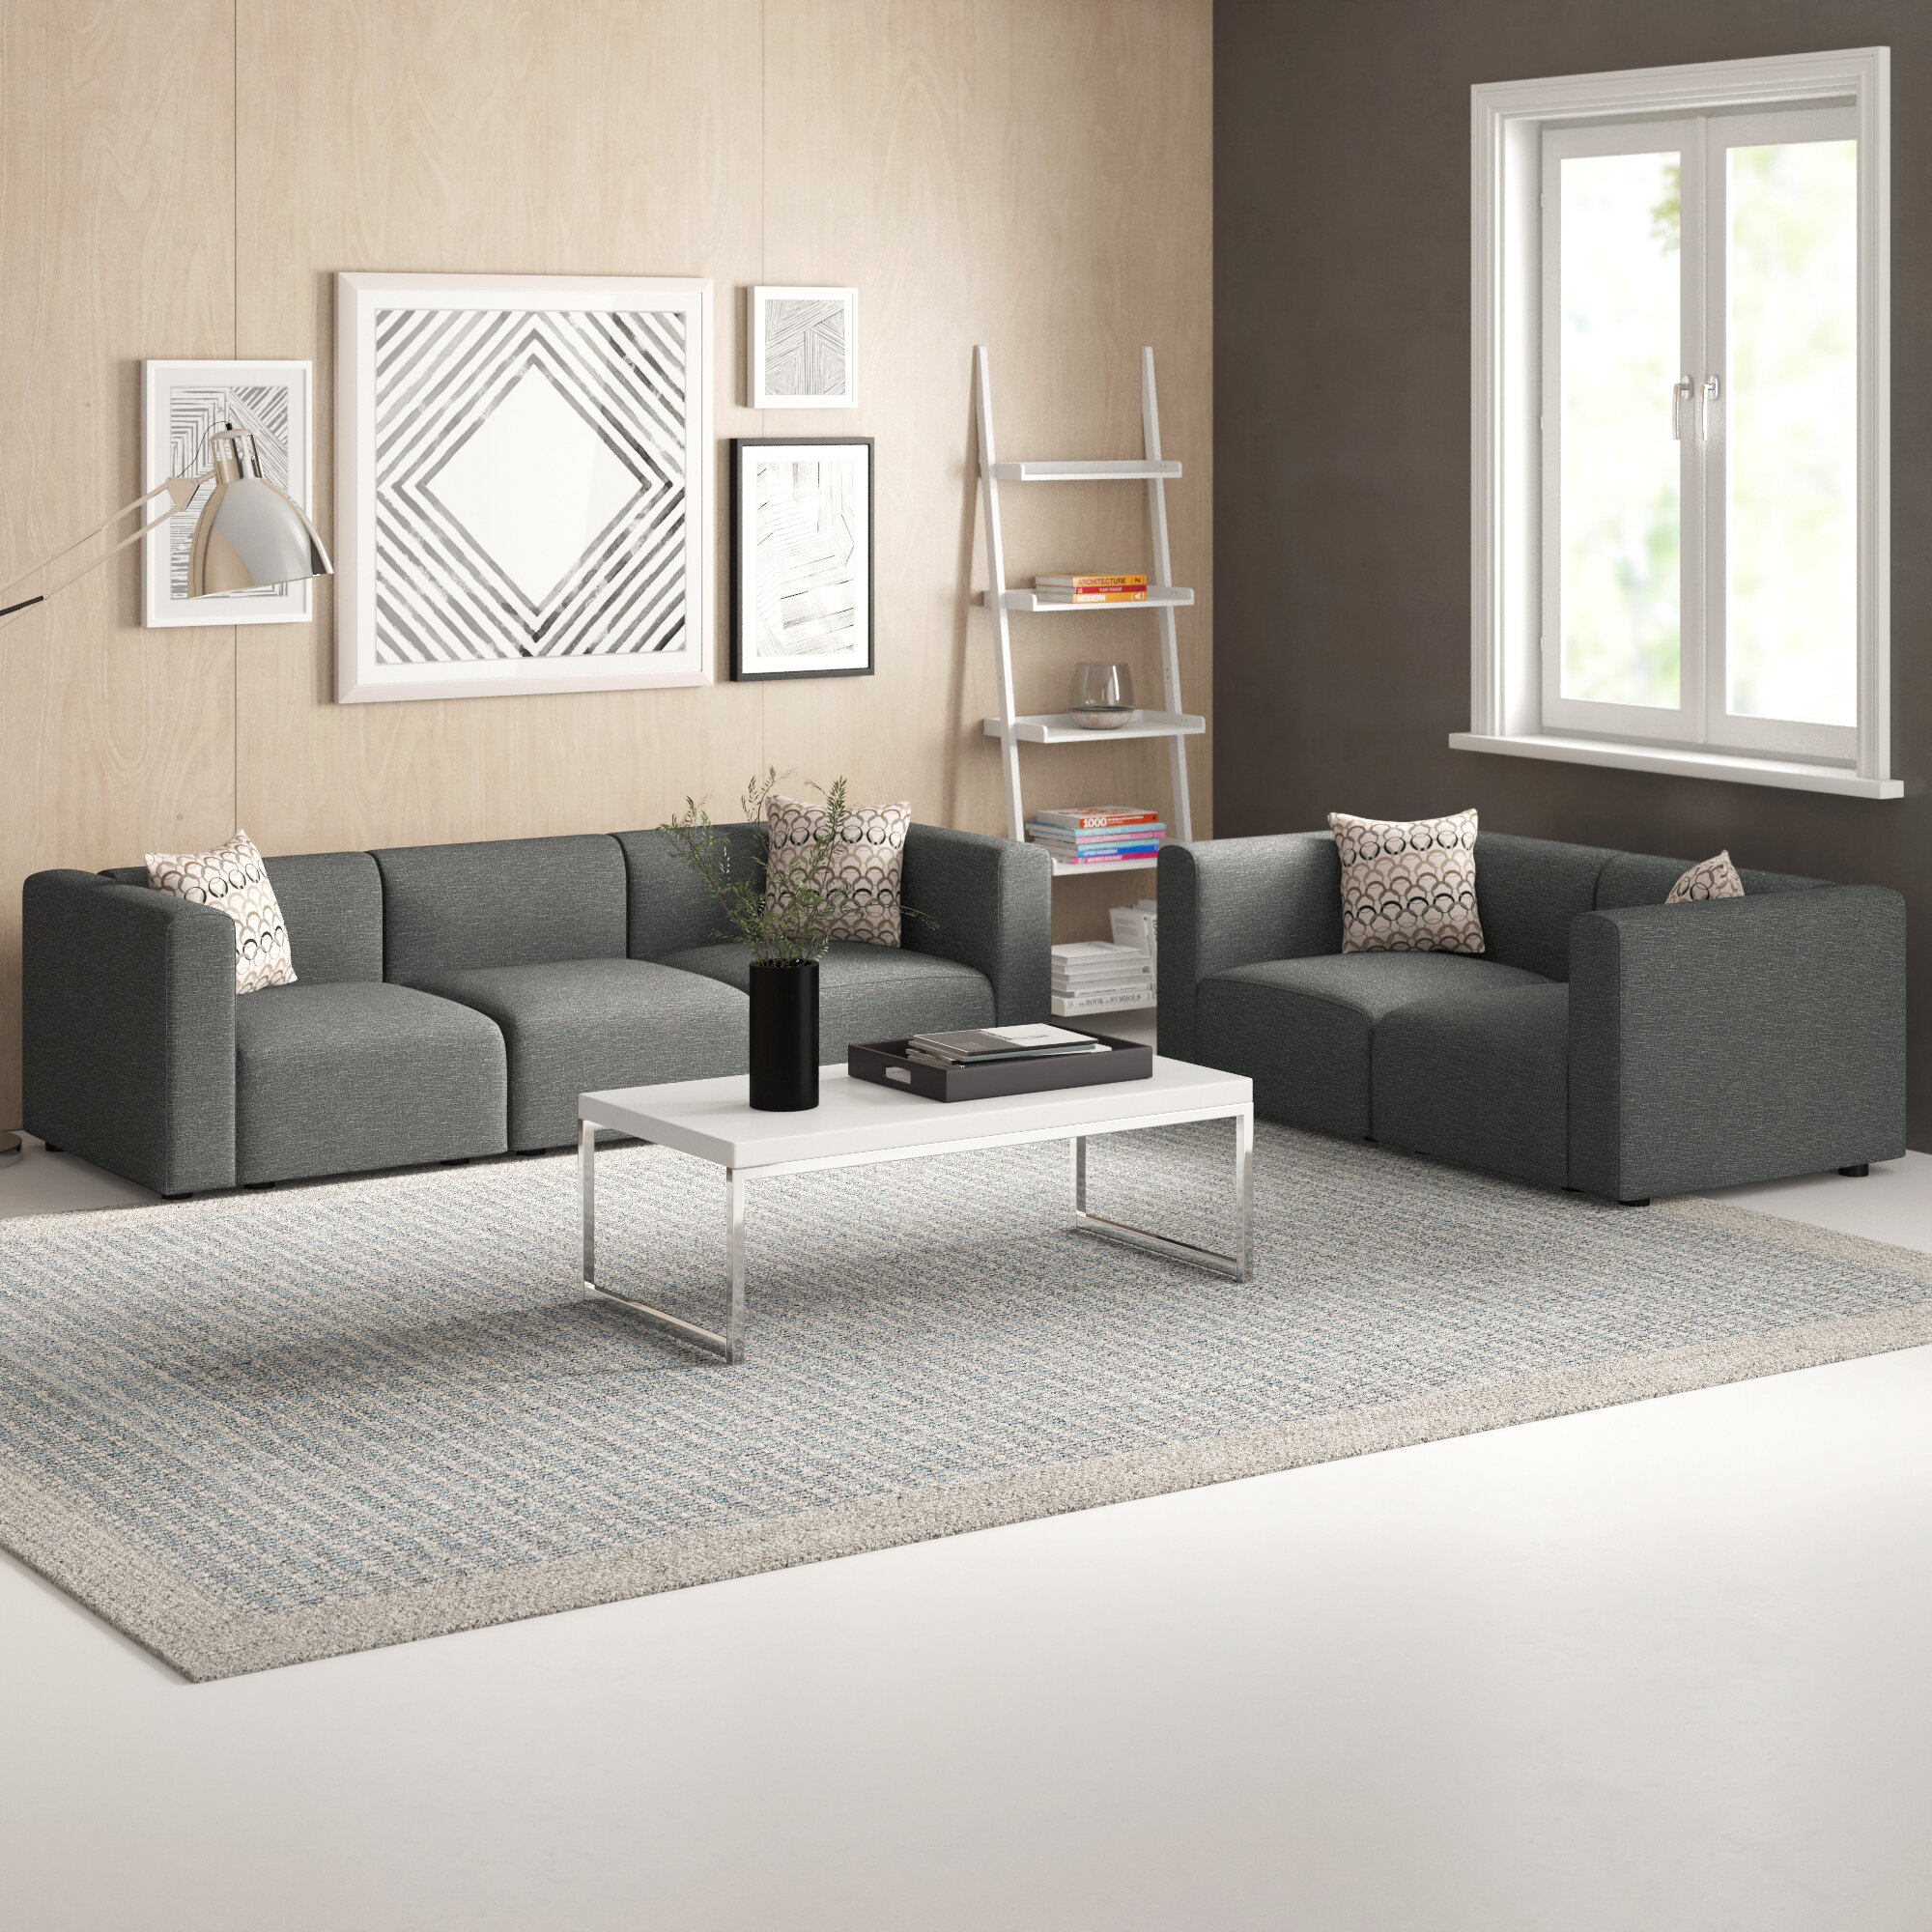 Remarkable Photos Of Modular Living Room Furniture Blazy Design